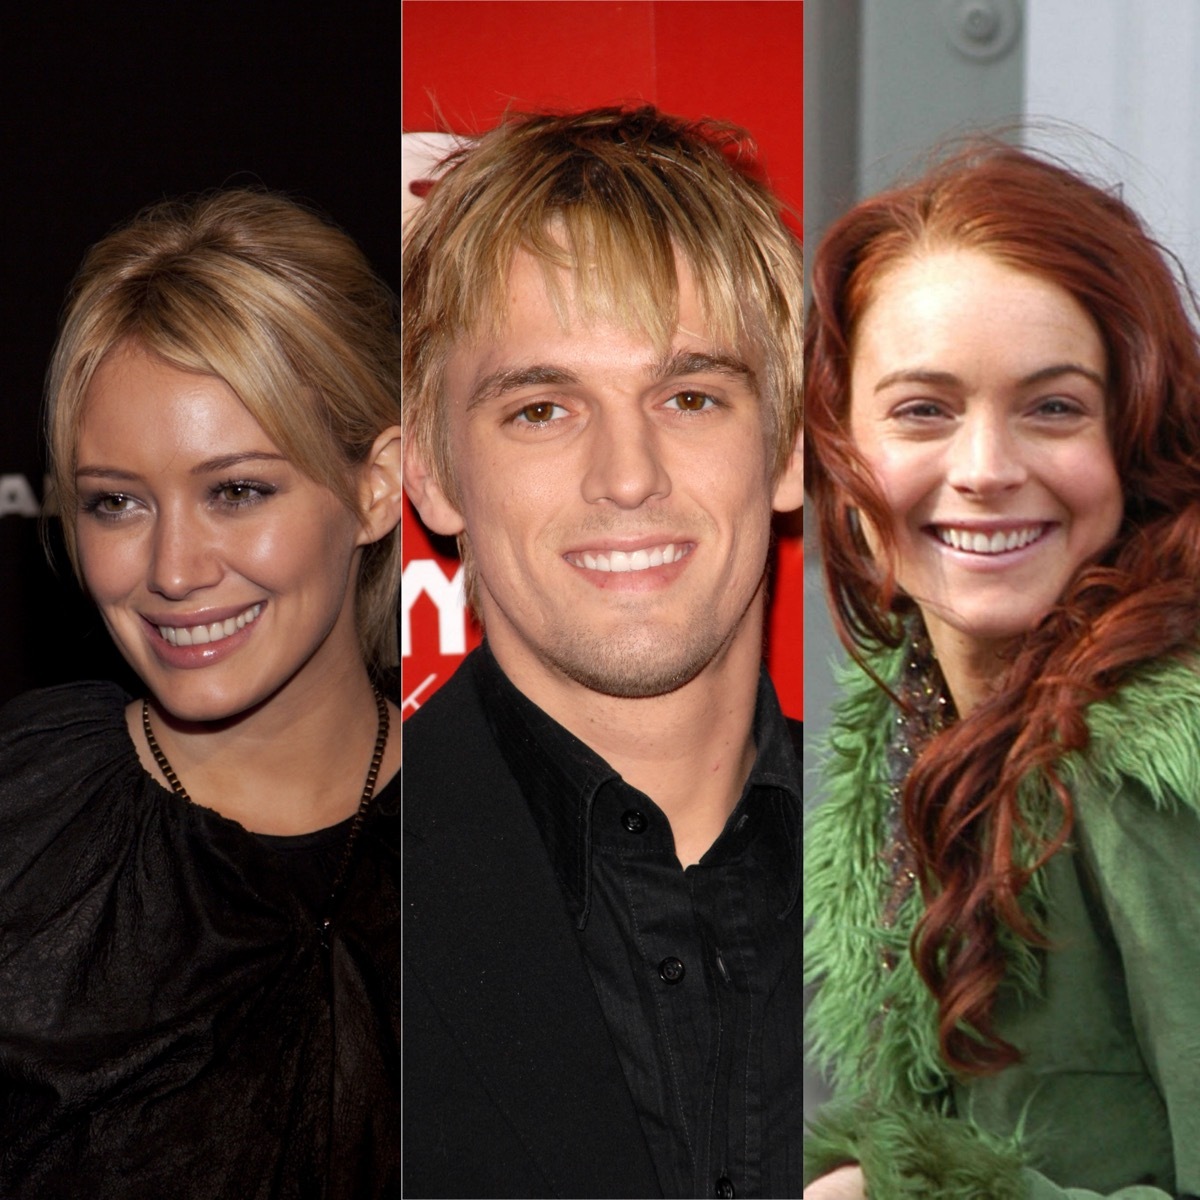 Hilary Duff, Aaron Carter, and Lindsay Lohan